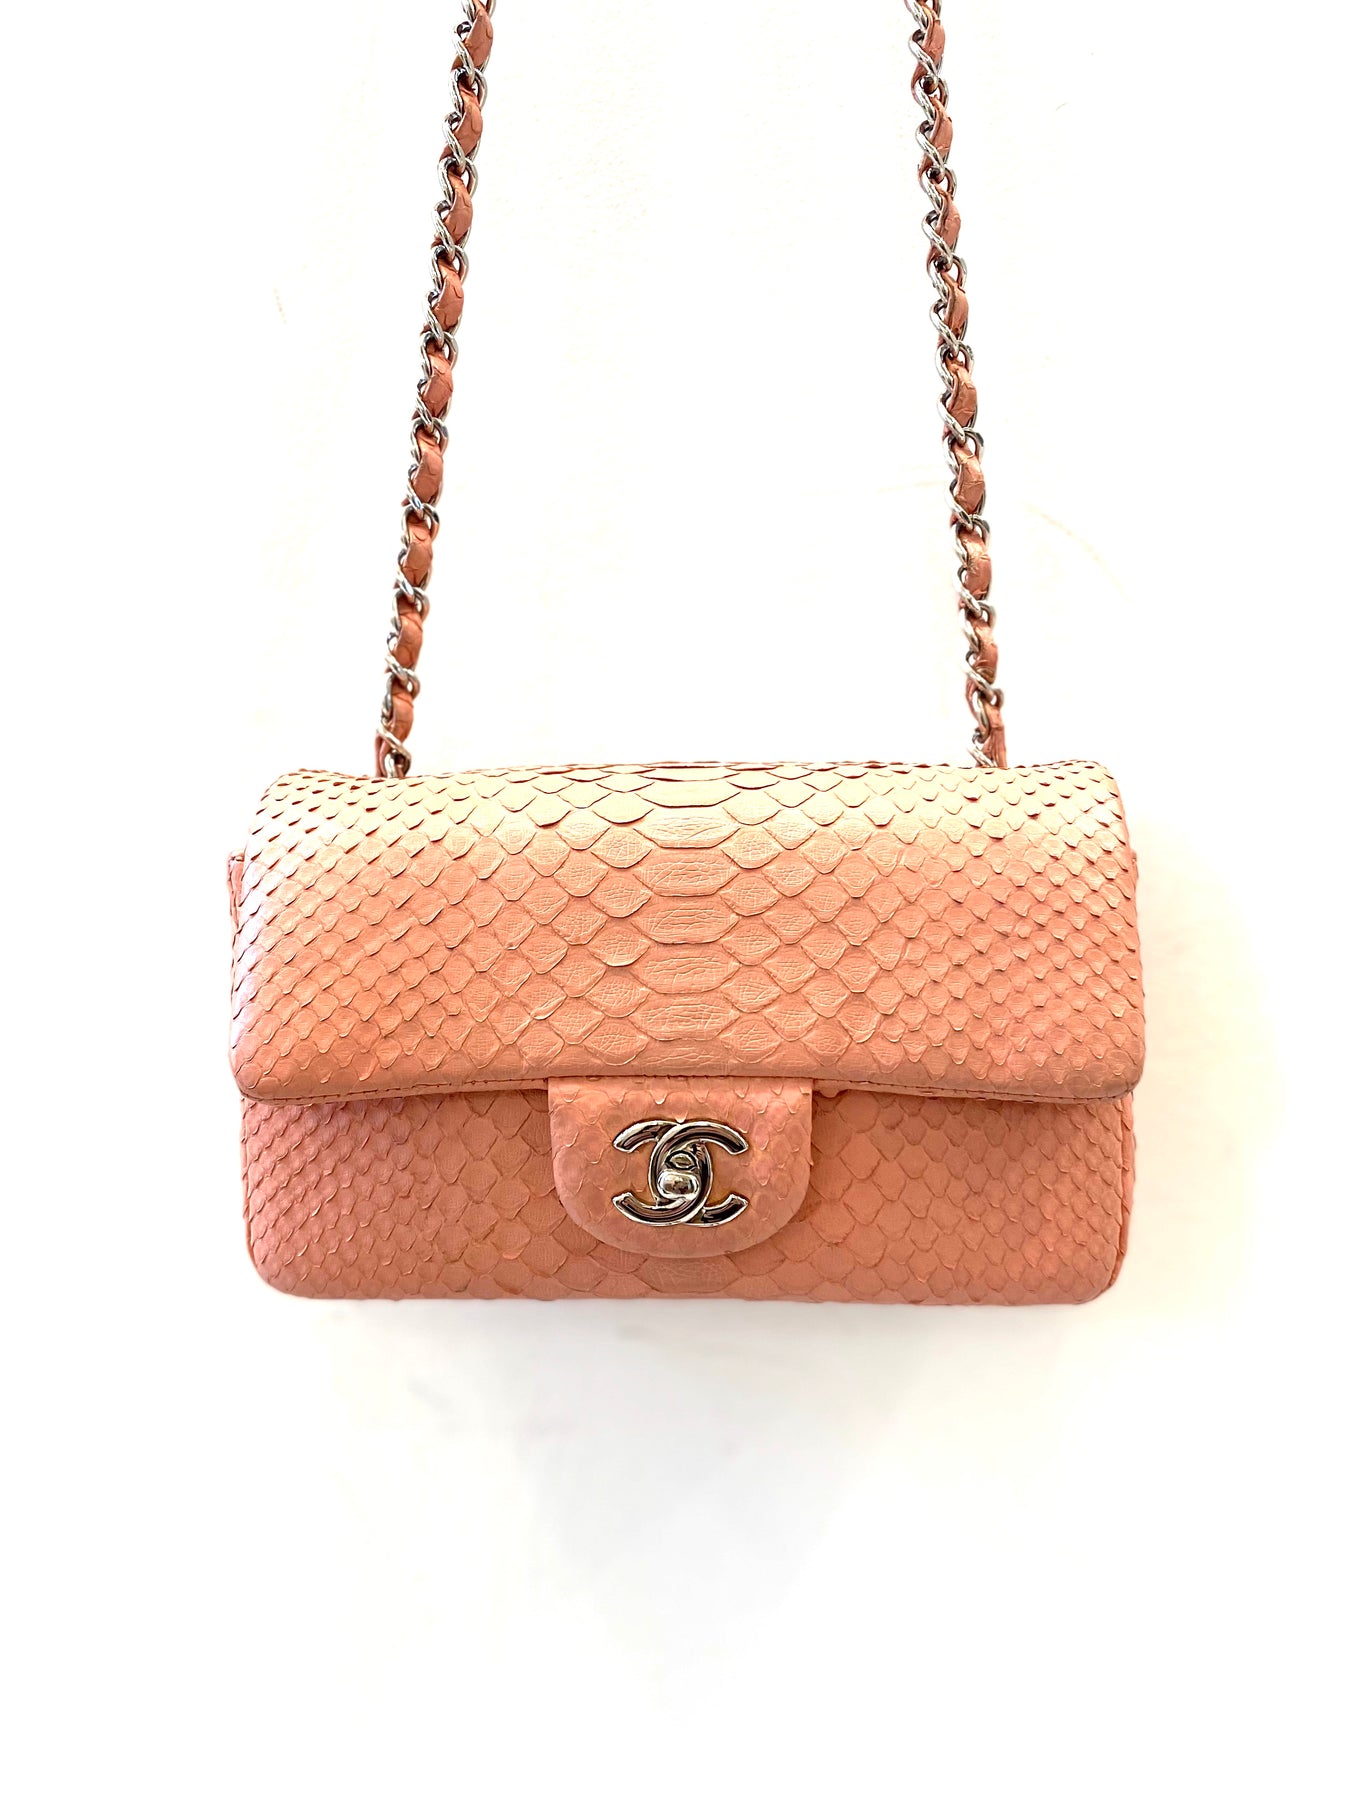 Chanel Python Double Flap Bag - 5 For Sale on 1stDibs